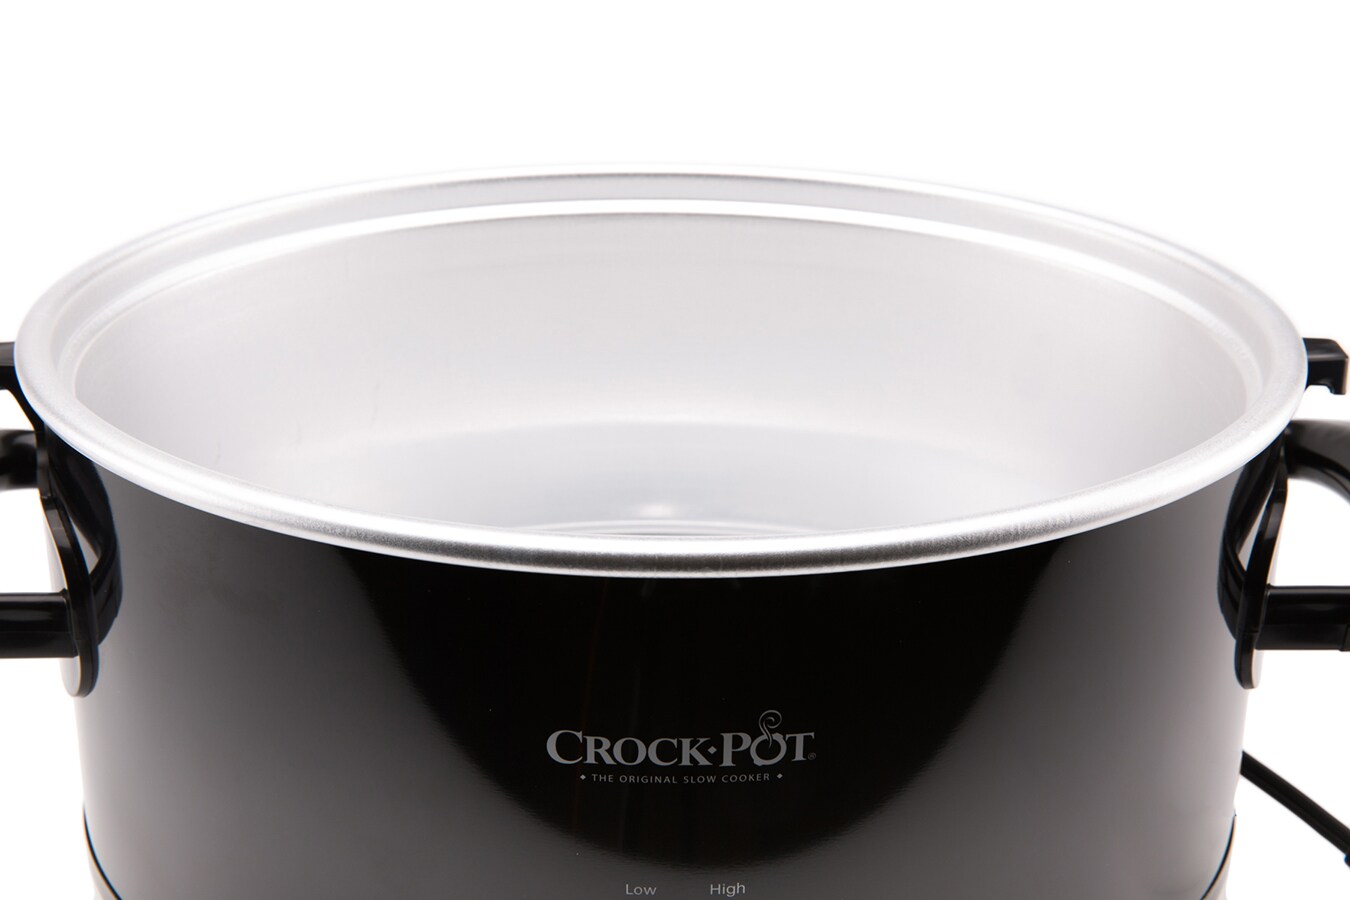 Crock-Pot SCCPVL600S Cook' N Carry 6-Quart Oval Portable Slow Cooker, Silver